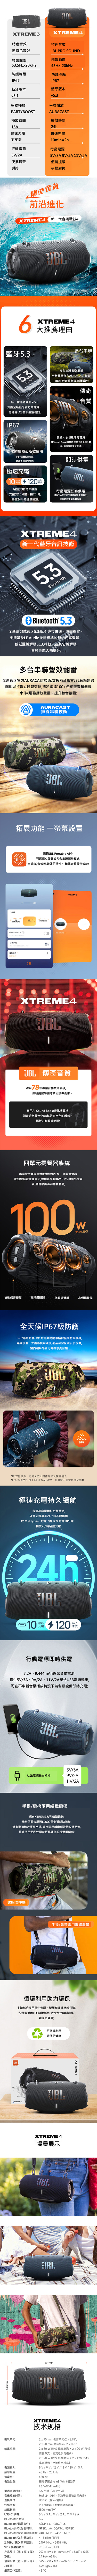 JBL Xtreme 4 Portable Bluetooth Speaker 